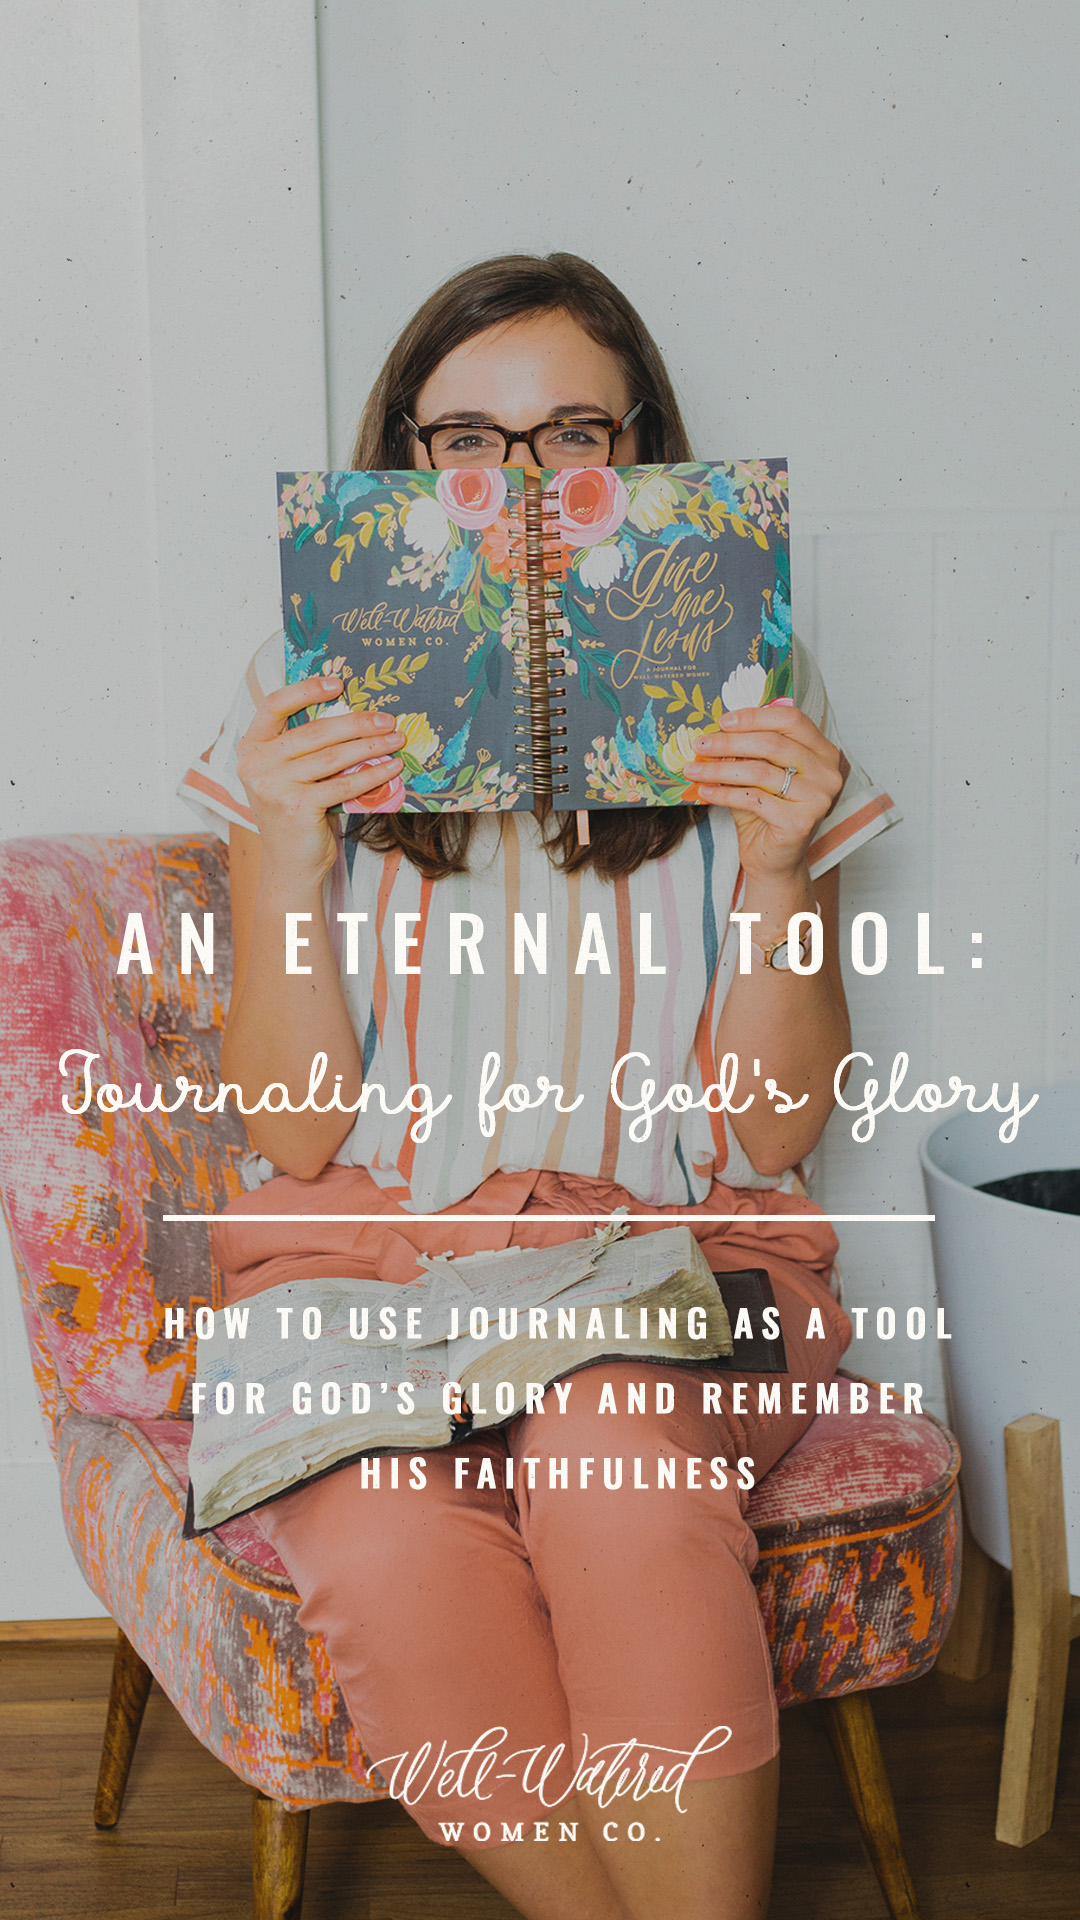 Well Watered Women Blog | An Eternal Tool - Journaling for God's Glory